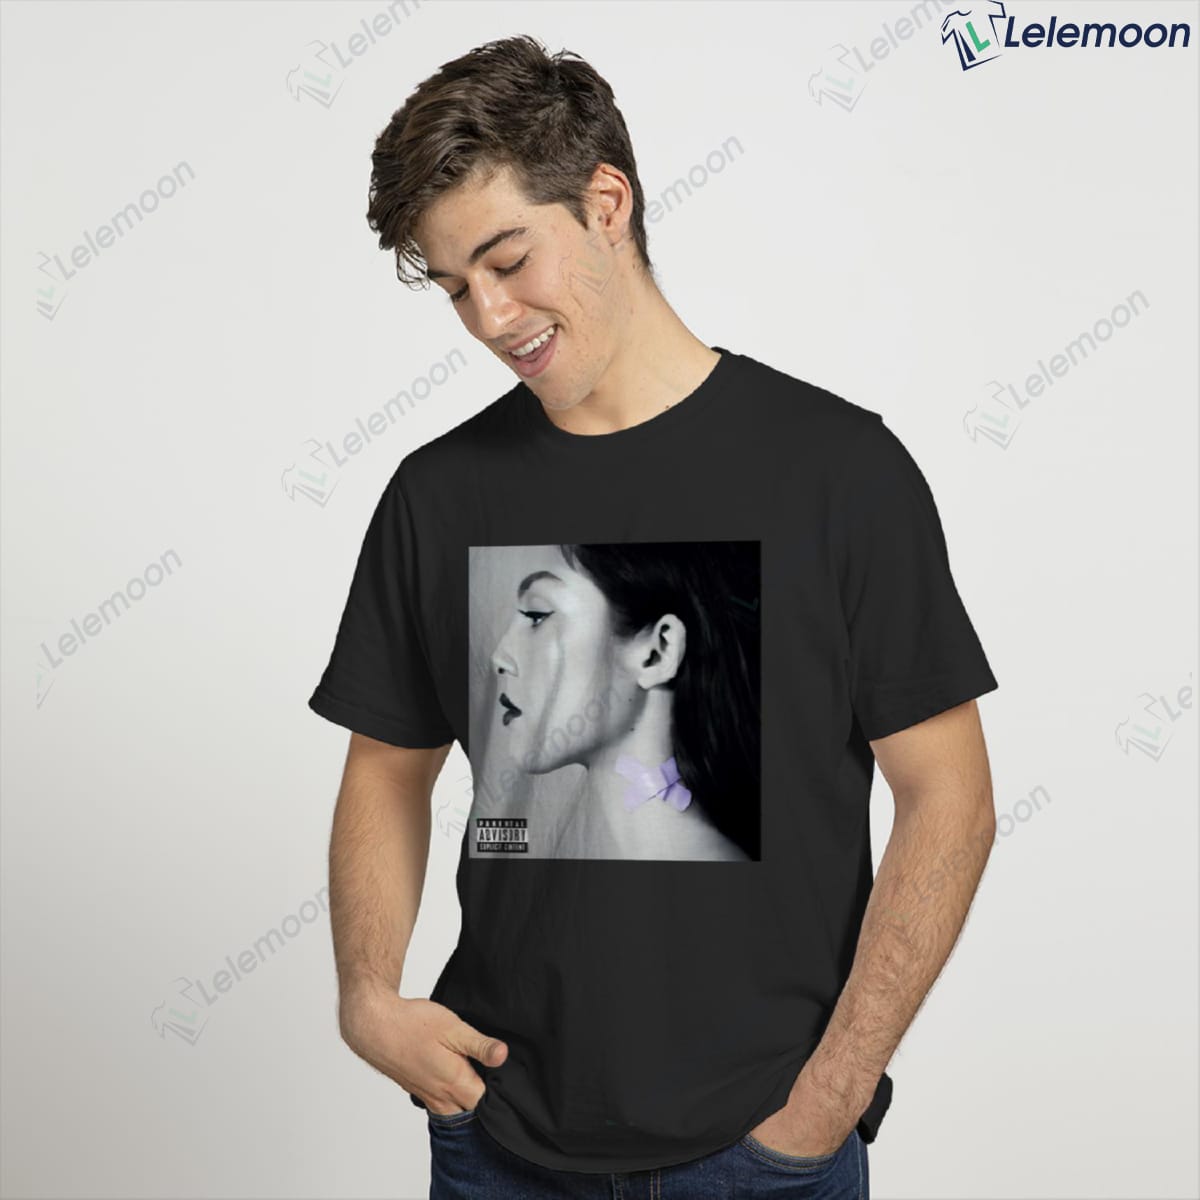 2023 New Single Vampire Olivia Rodrigo Vampire Merch T-Shirt